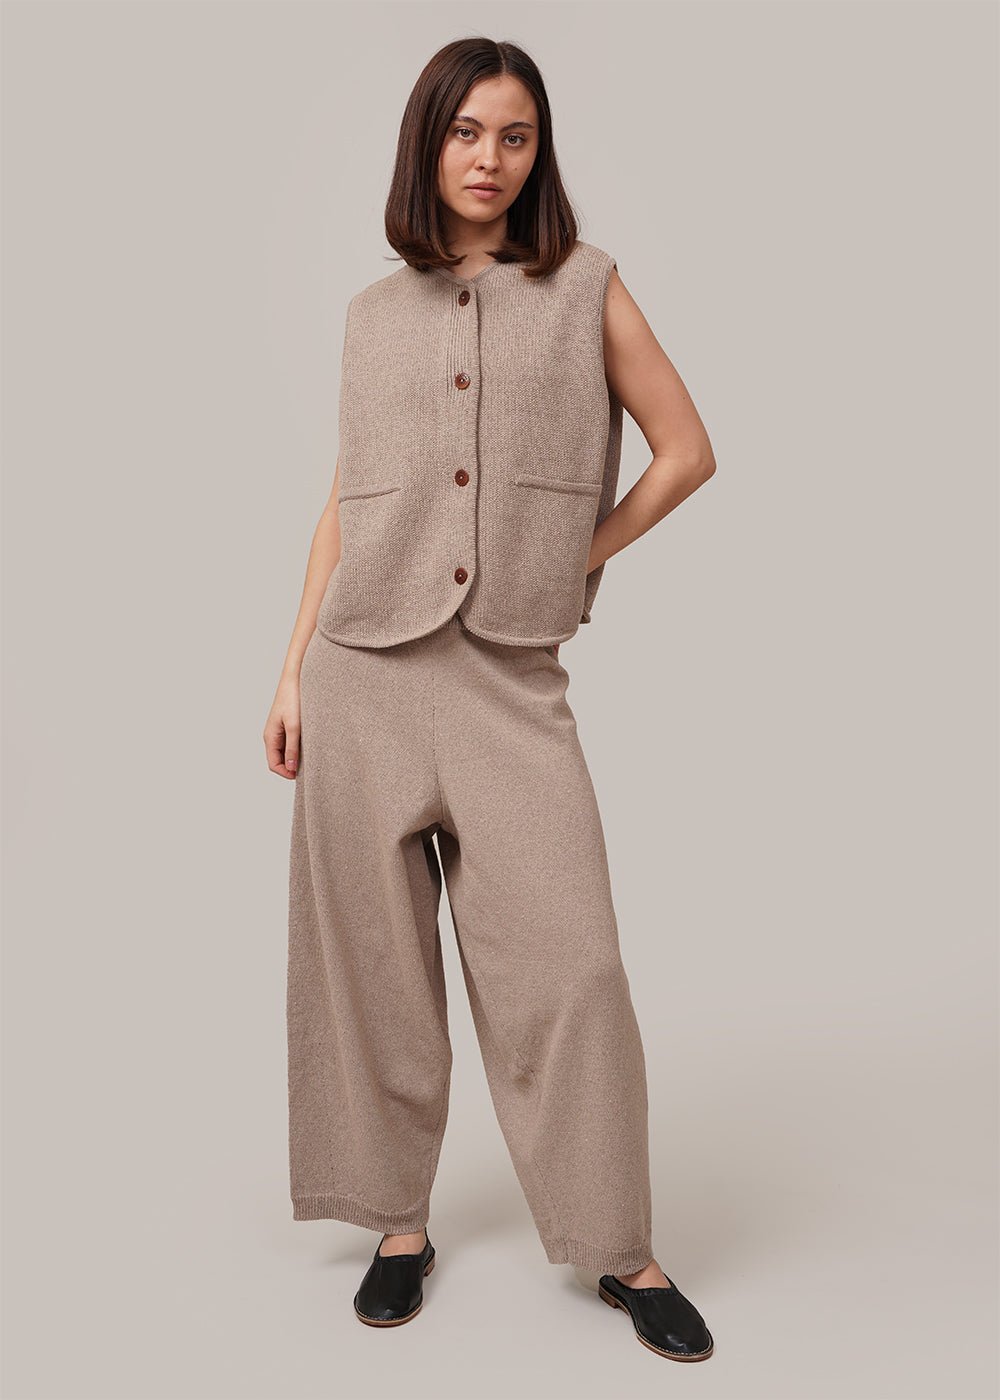 Cordera Taupe Cotton Waistcoat - New Classics Studios Sustainable Ethical Fashion Canada